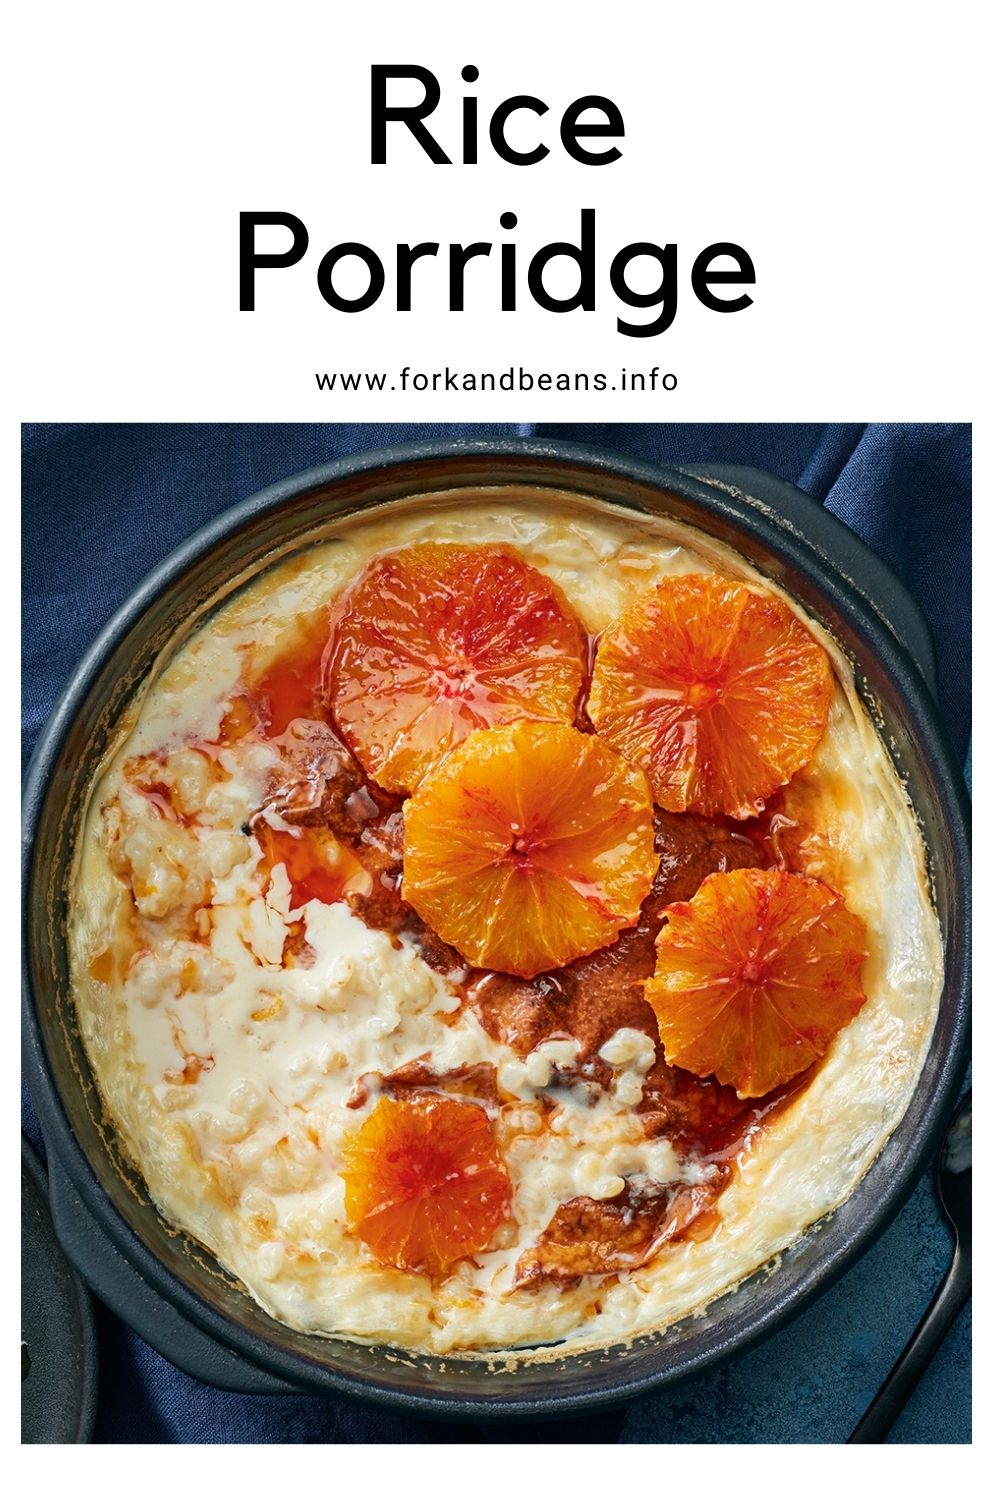 Rice porridge with caramelized oranges